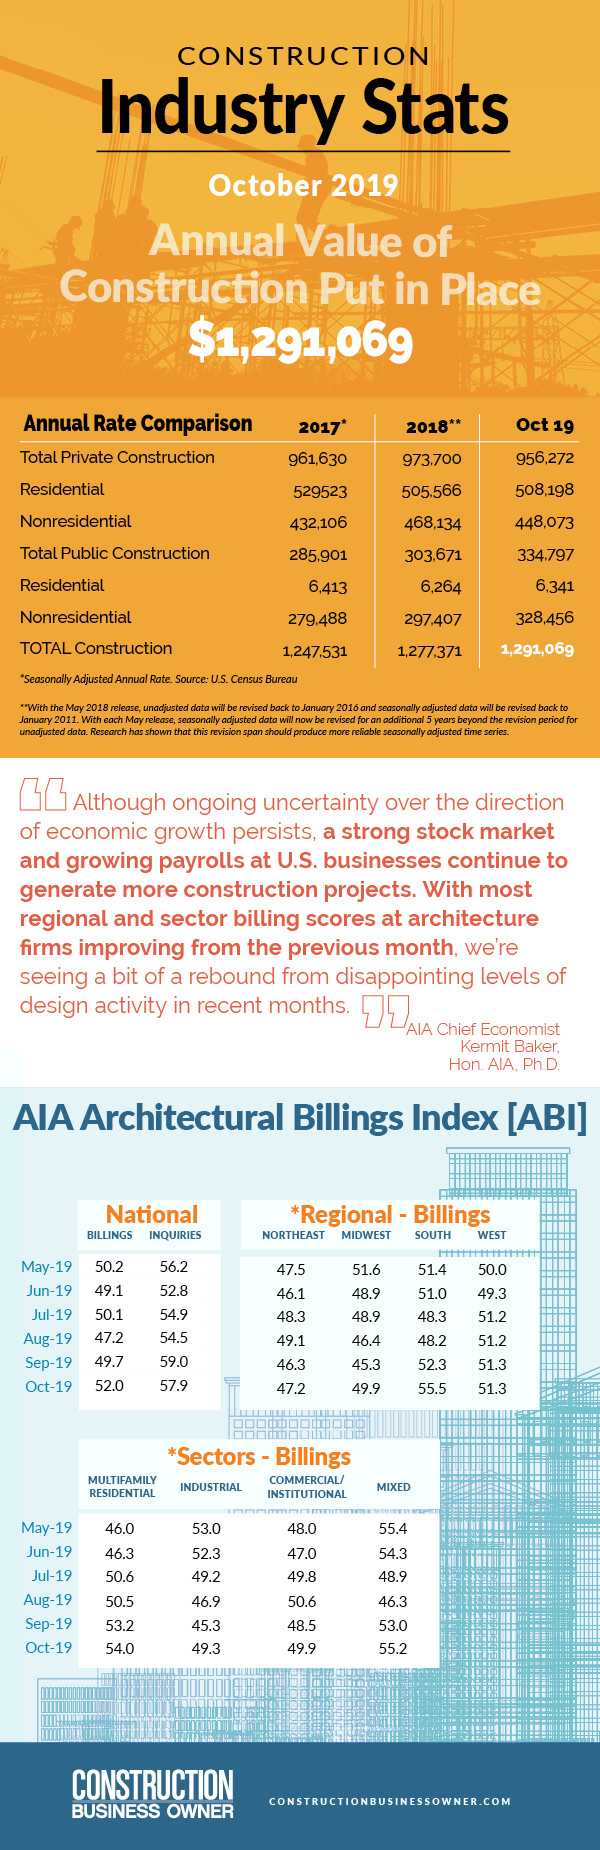 January 2020 Construction Industry Stats